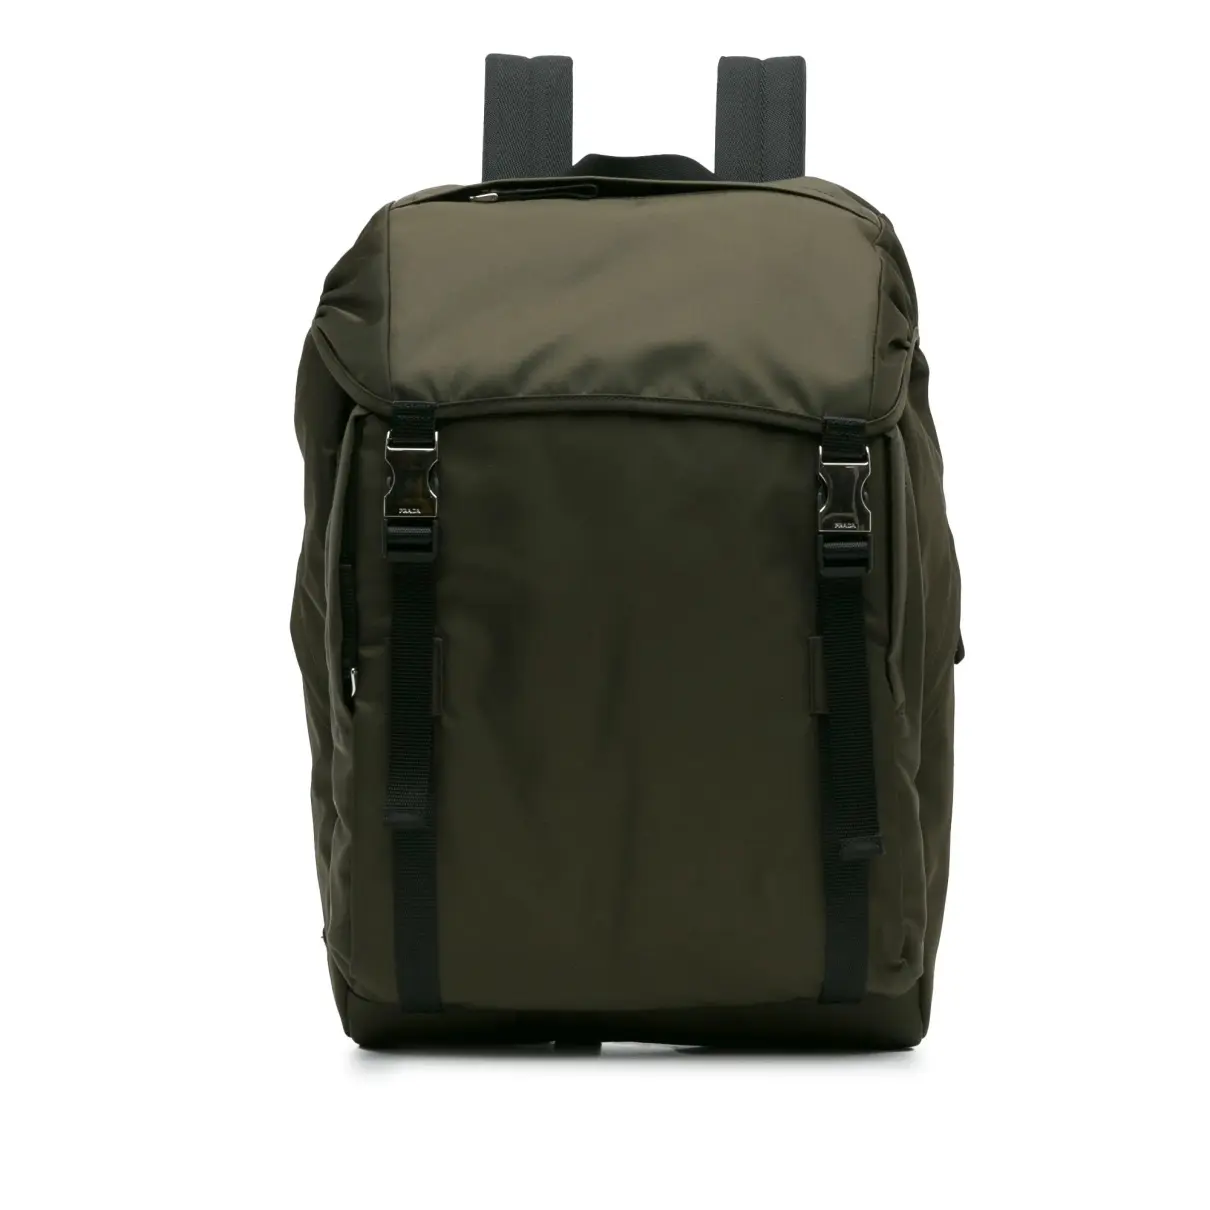 Re-Nylon cloth backpack